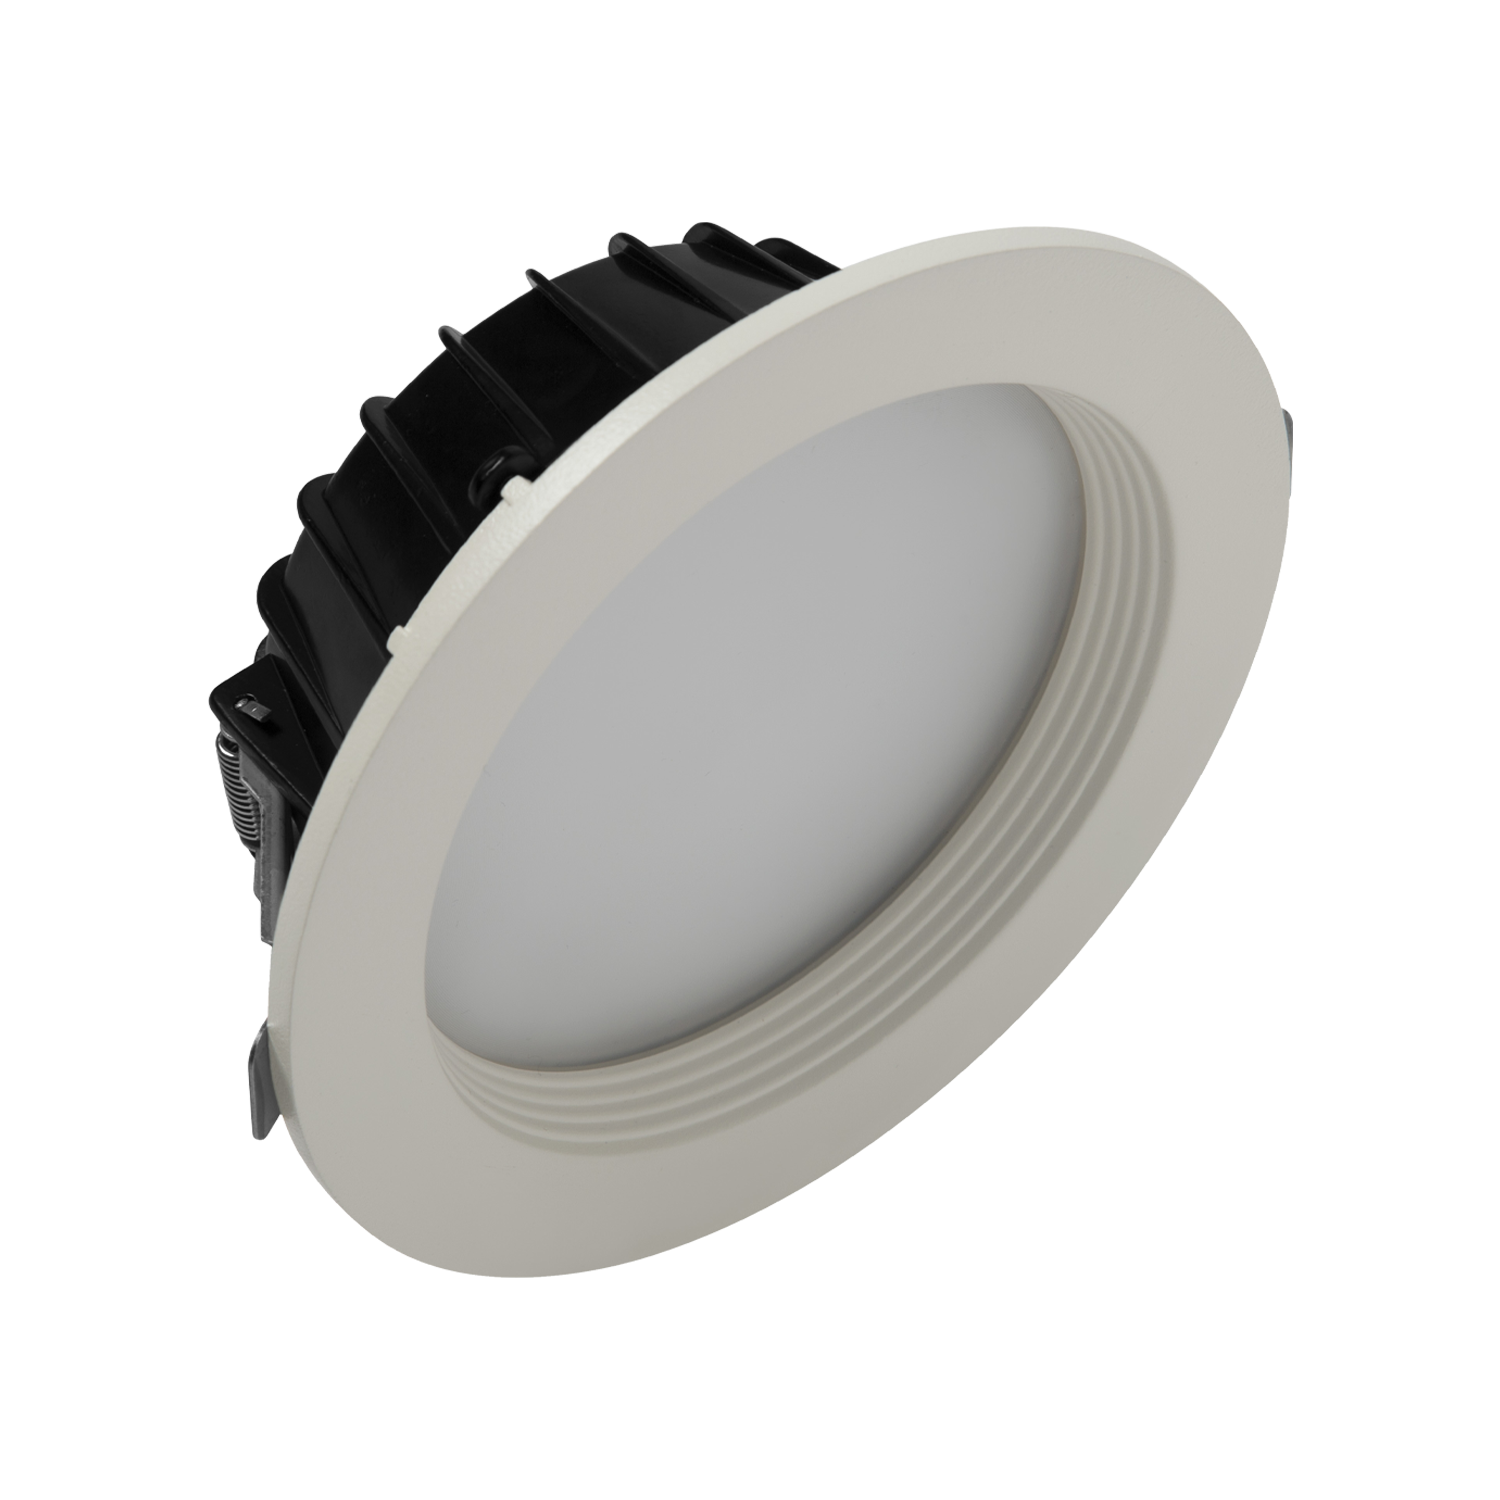 Luminaria LED de empotrar en techo blanco 10 W 100-277 V~ 4 000 K, TL-4440.B40